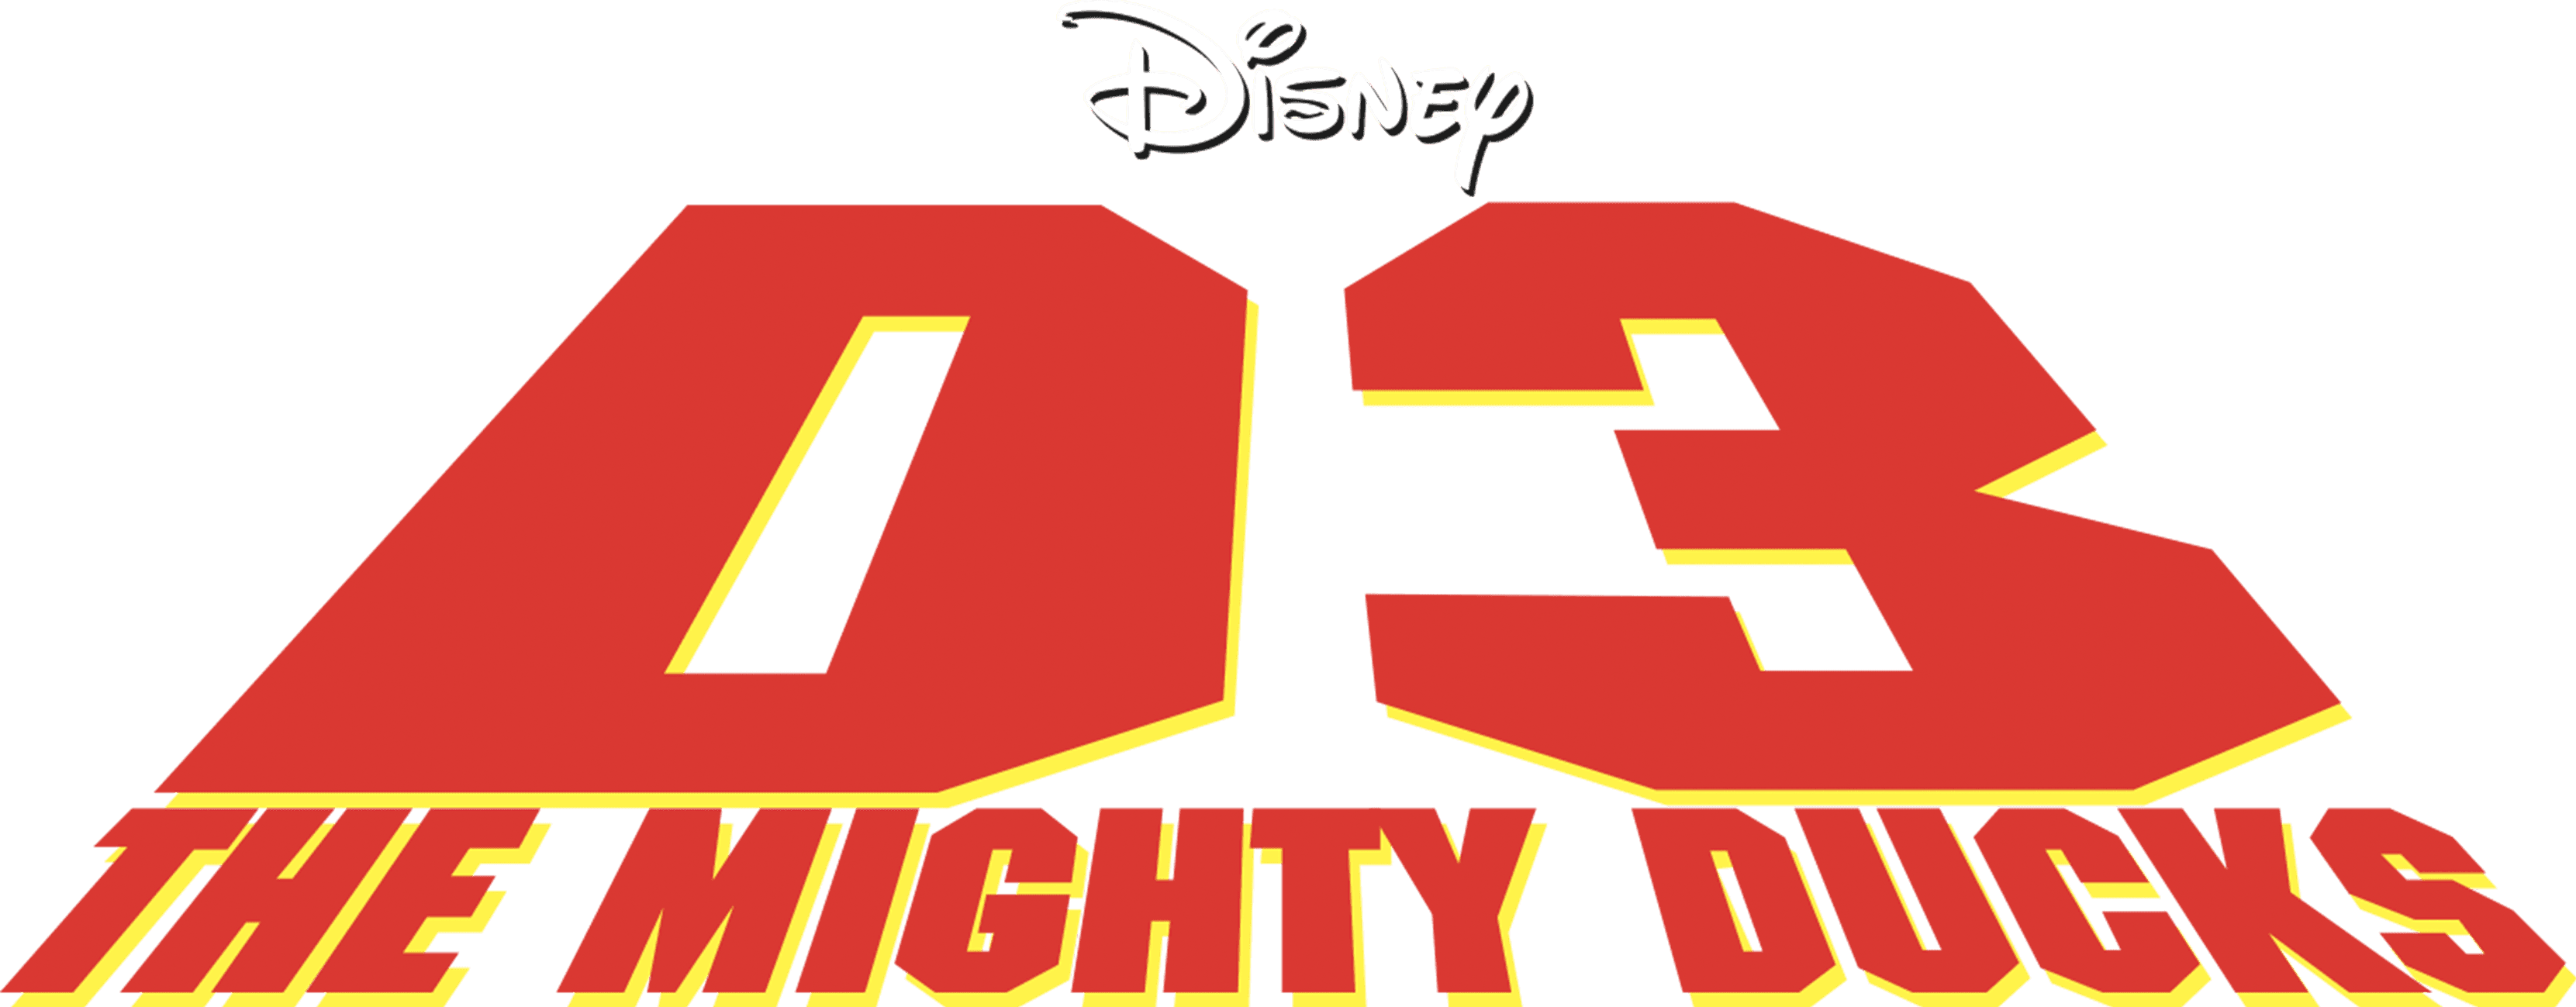 D3: The Mighty Ducks logo